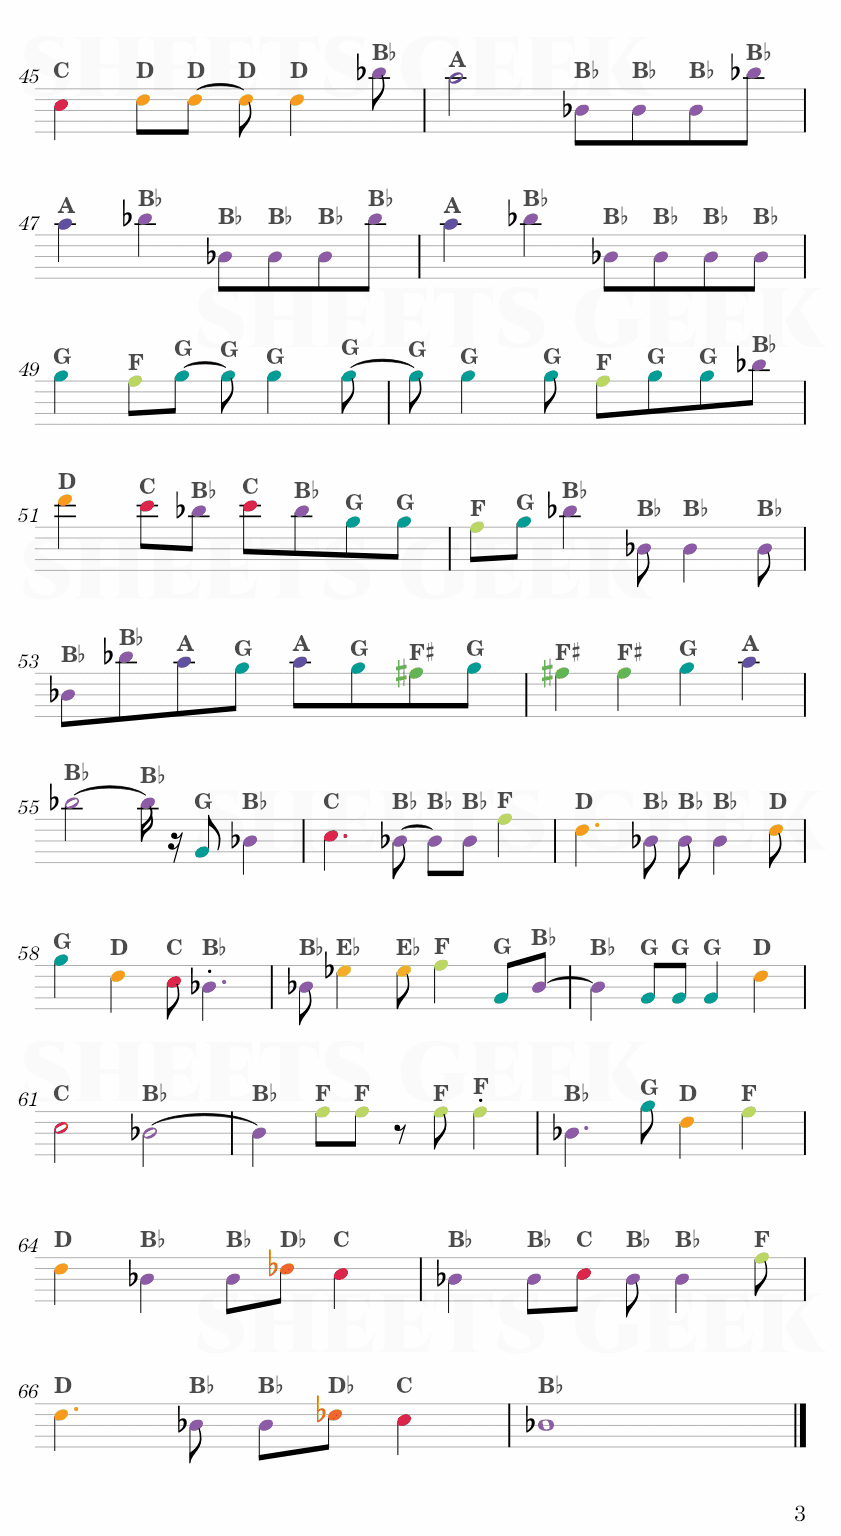 Kaikai Kitan - Jujutsu Kaisen Opening 1 Easy Sheet Music Free for piano, keyboard, flute, violin, sax, cello page 3